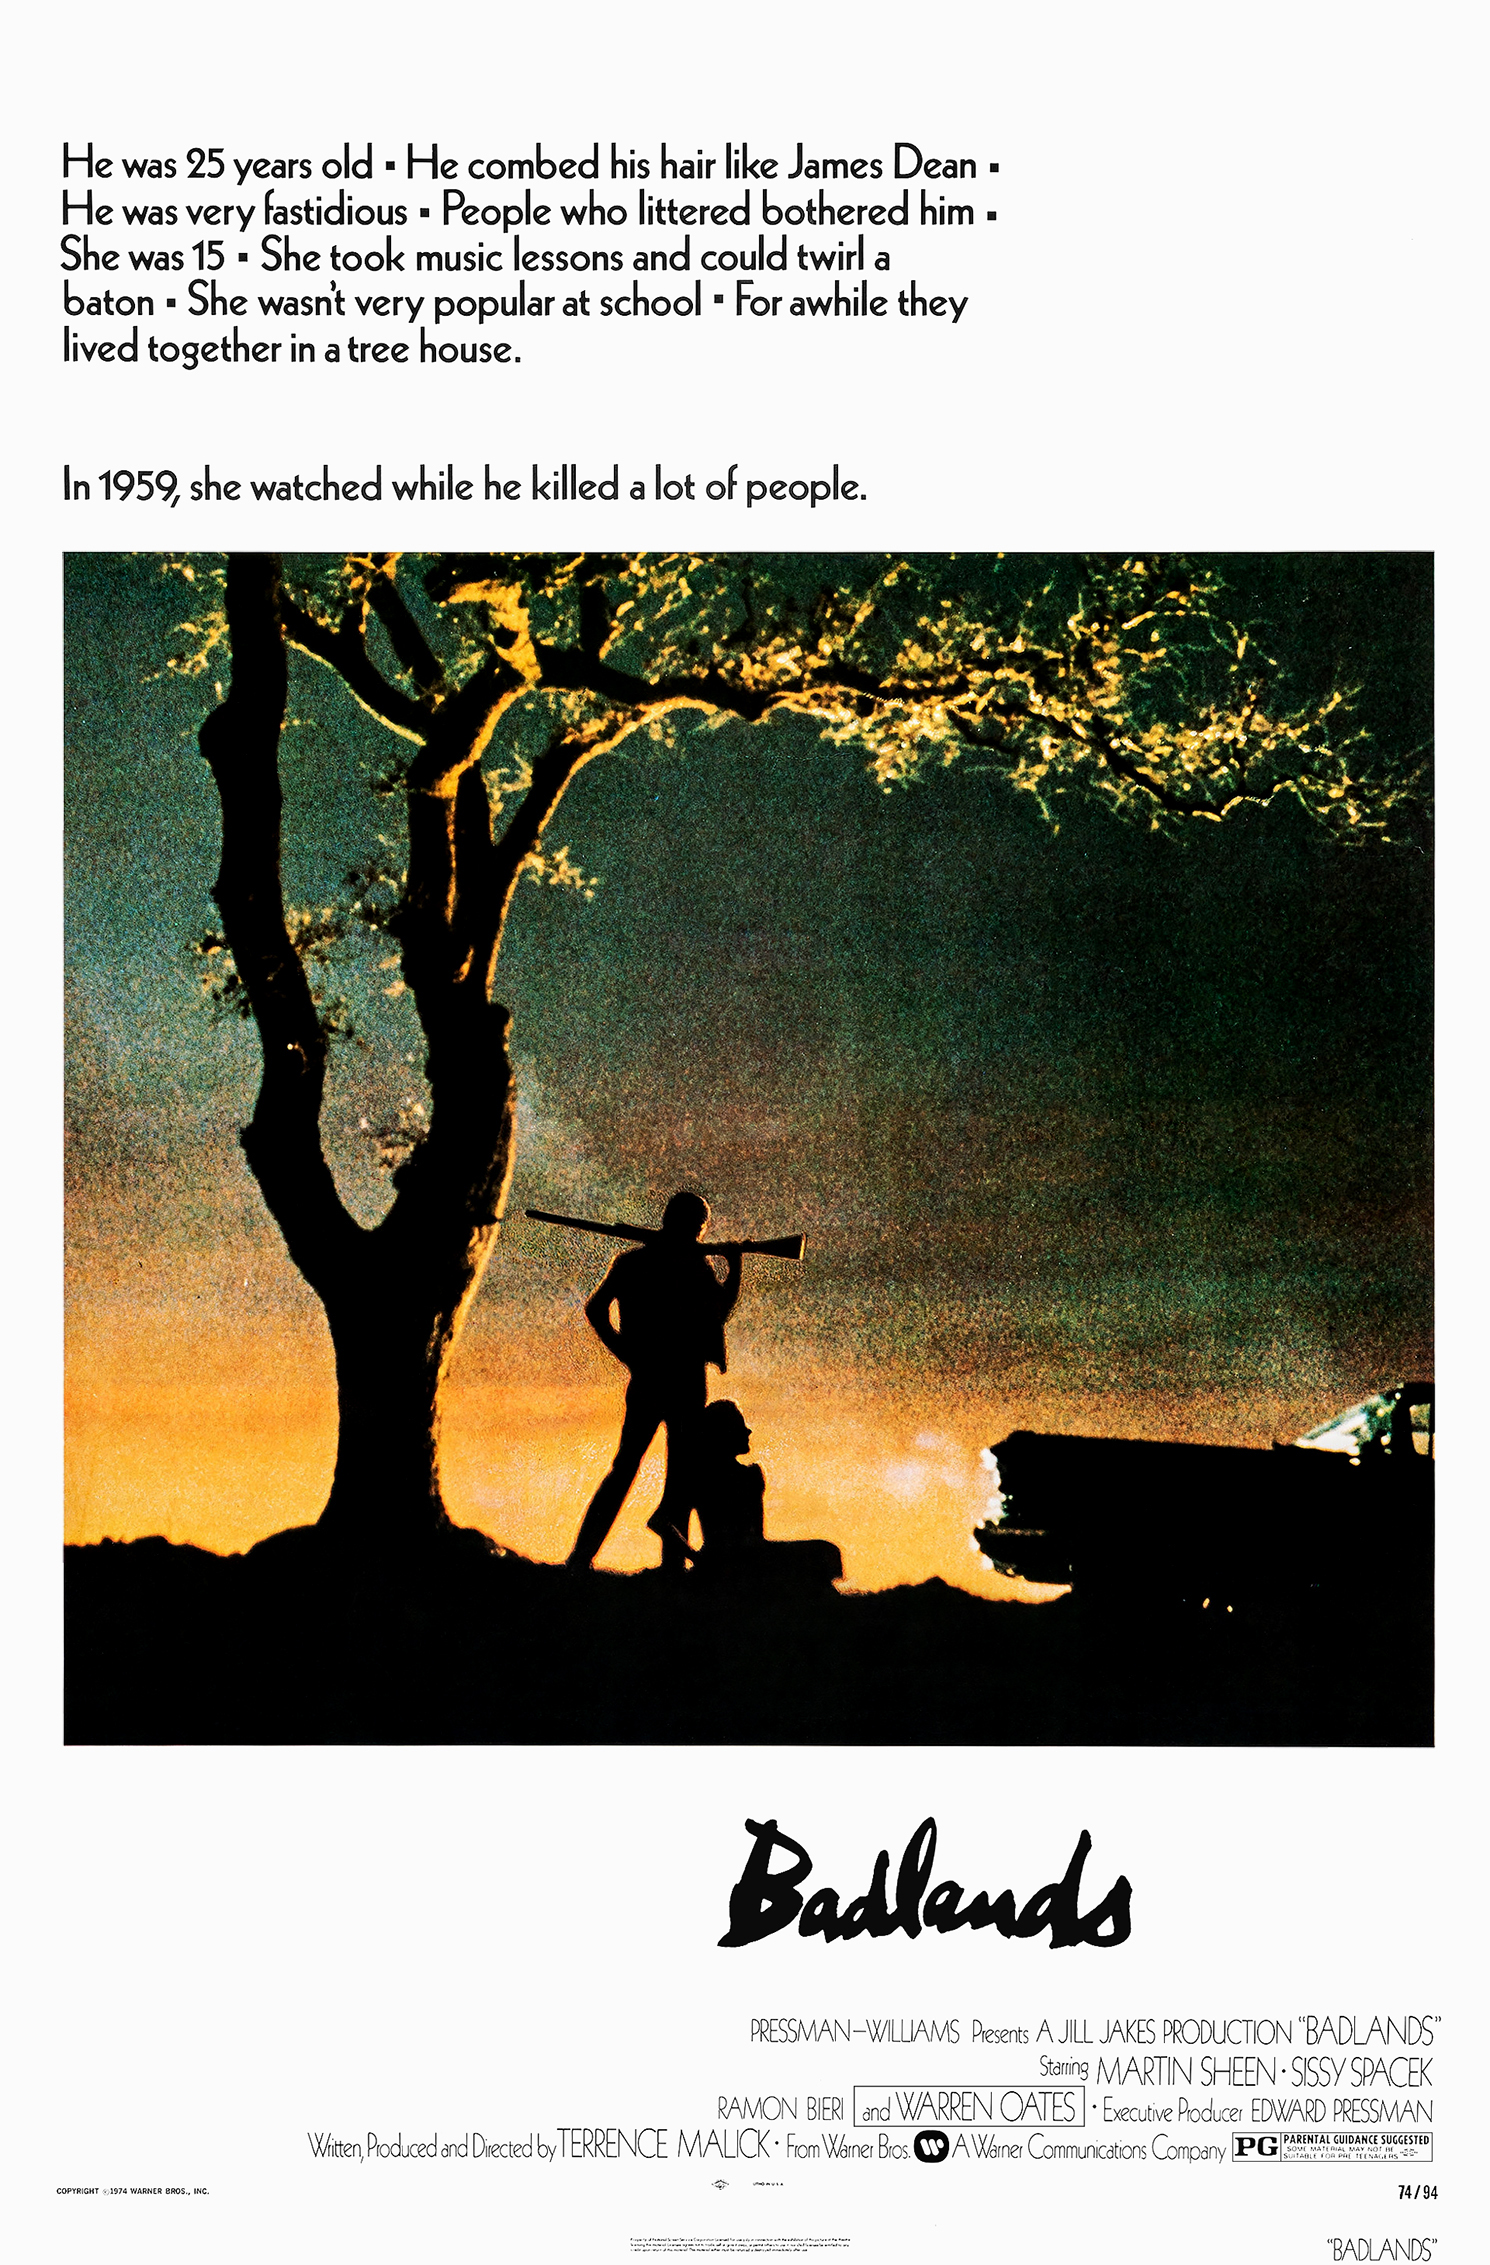 Badlands (1973)